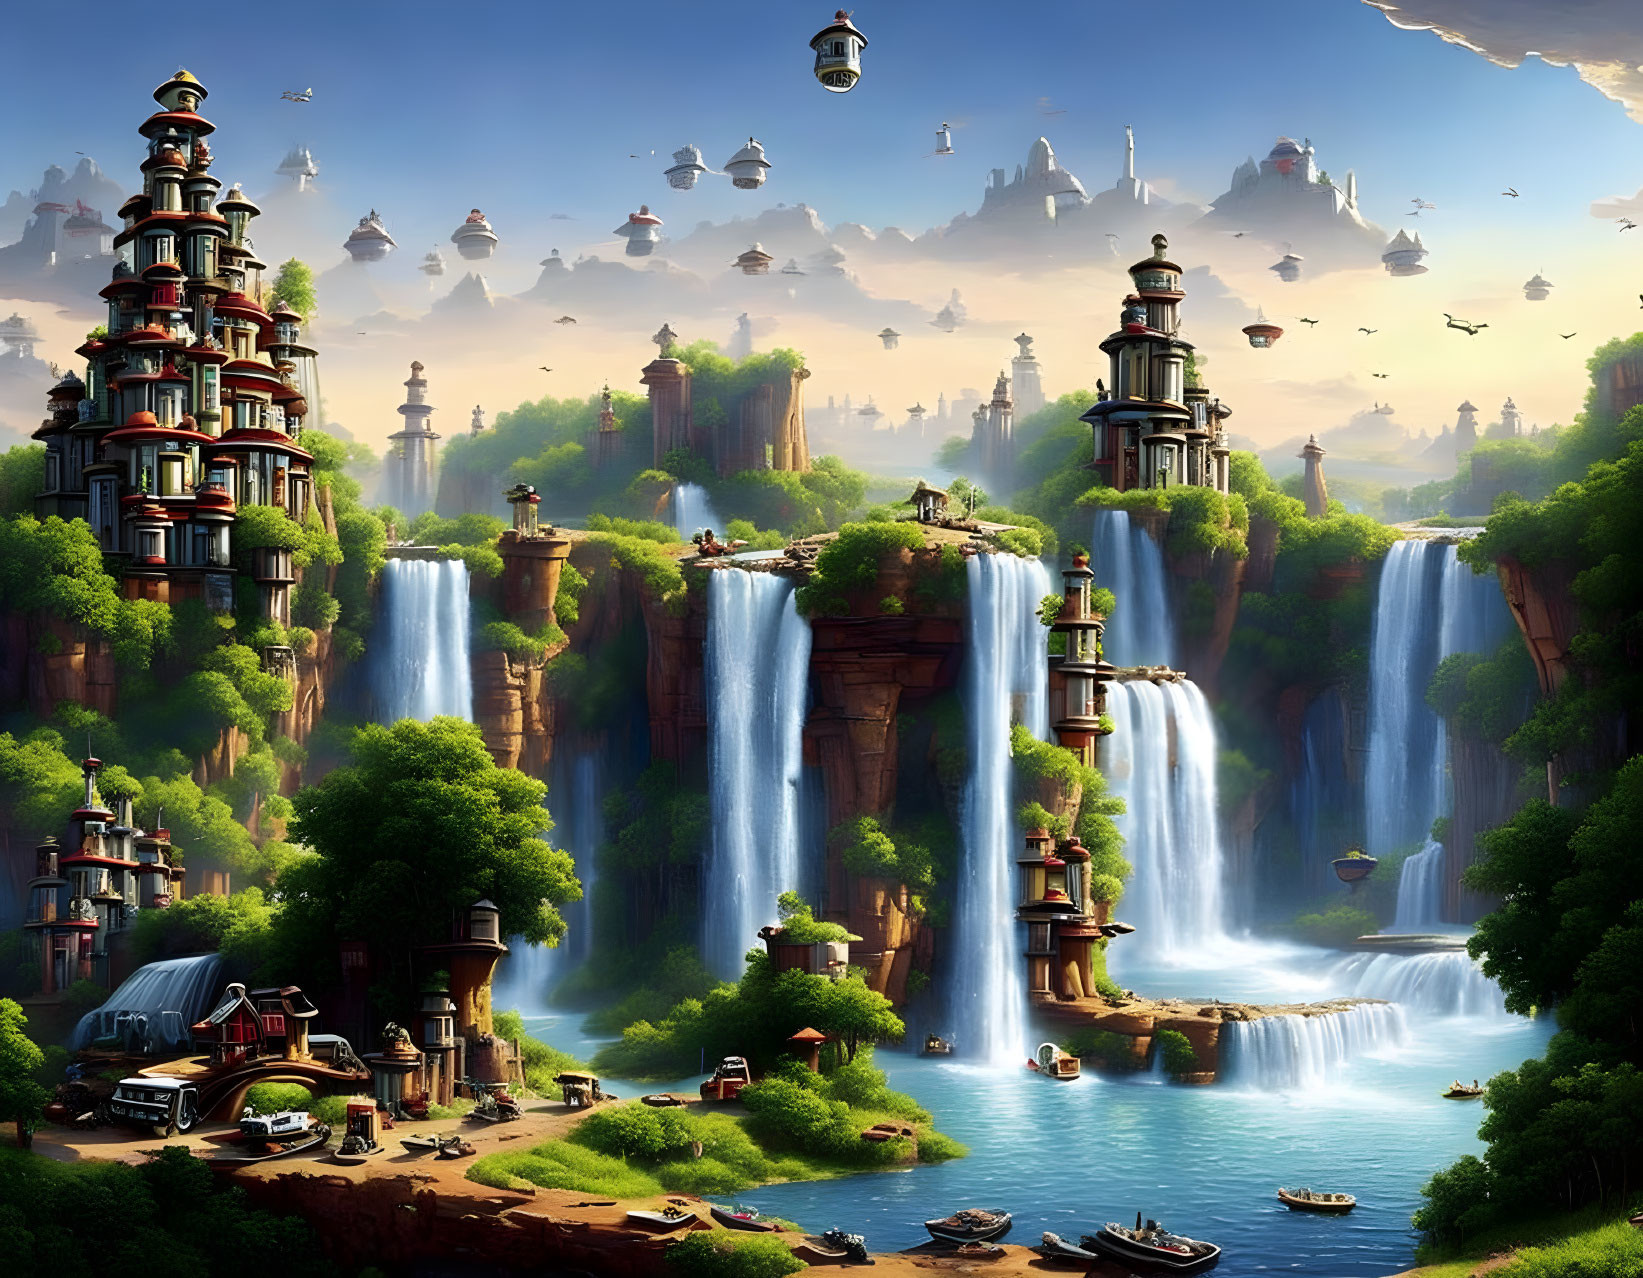 Fantastical landscape with waterfalls, pagodas, airships, greenery, and river